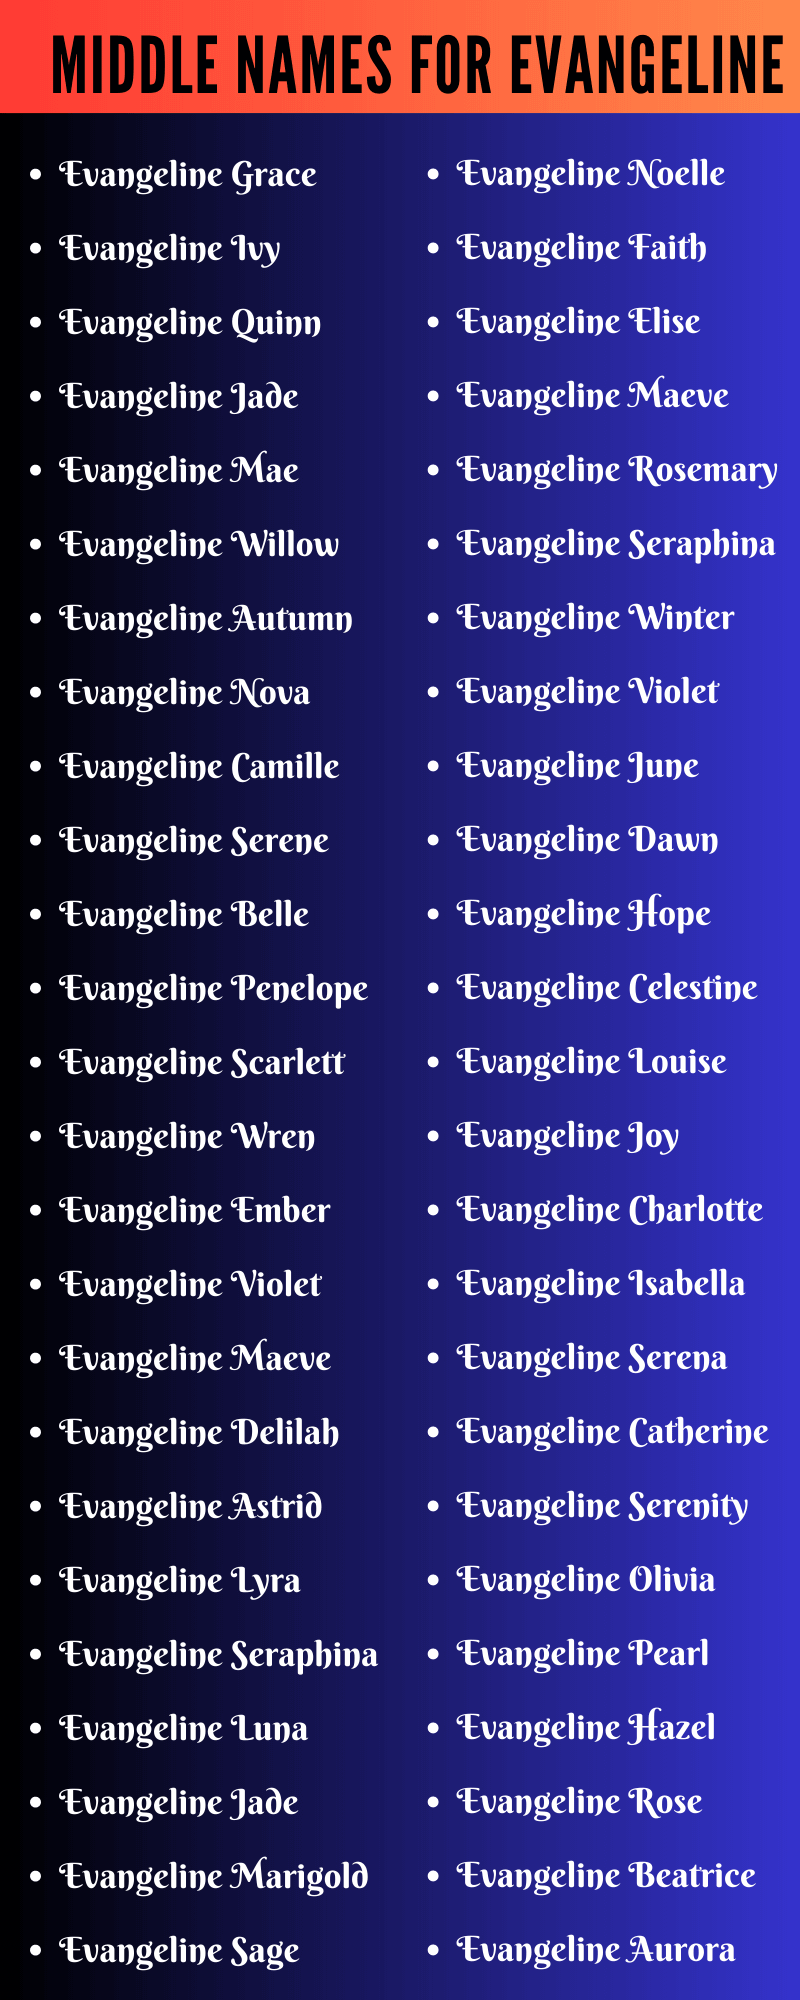 Middle Names For Evangeline